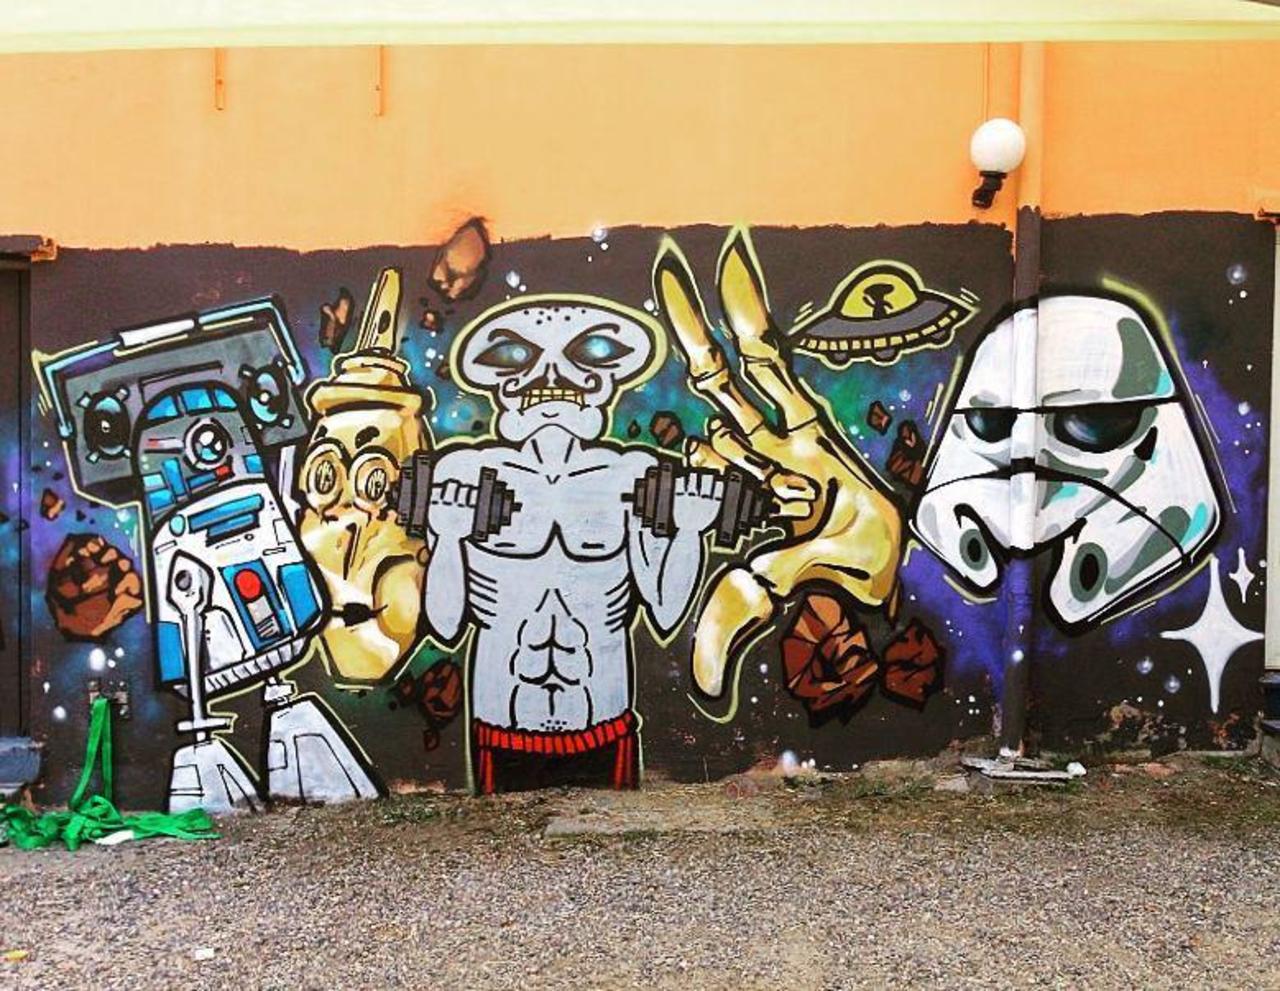 RT @artpushr: via #giano306 "http://ift.tt/1OCkkCq" #graffiti #streetart http://t.co/2GBKGvhulC